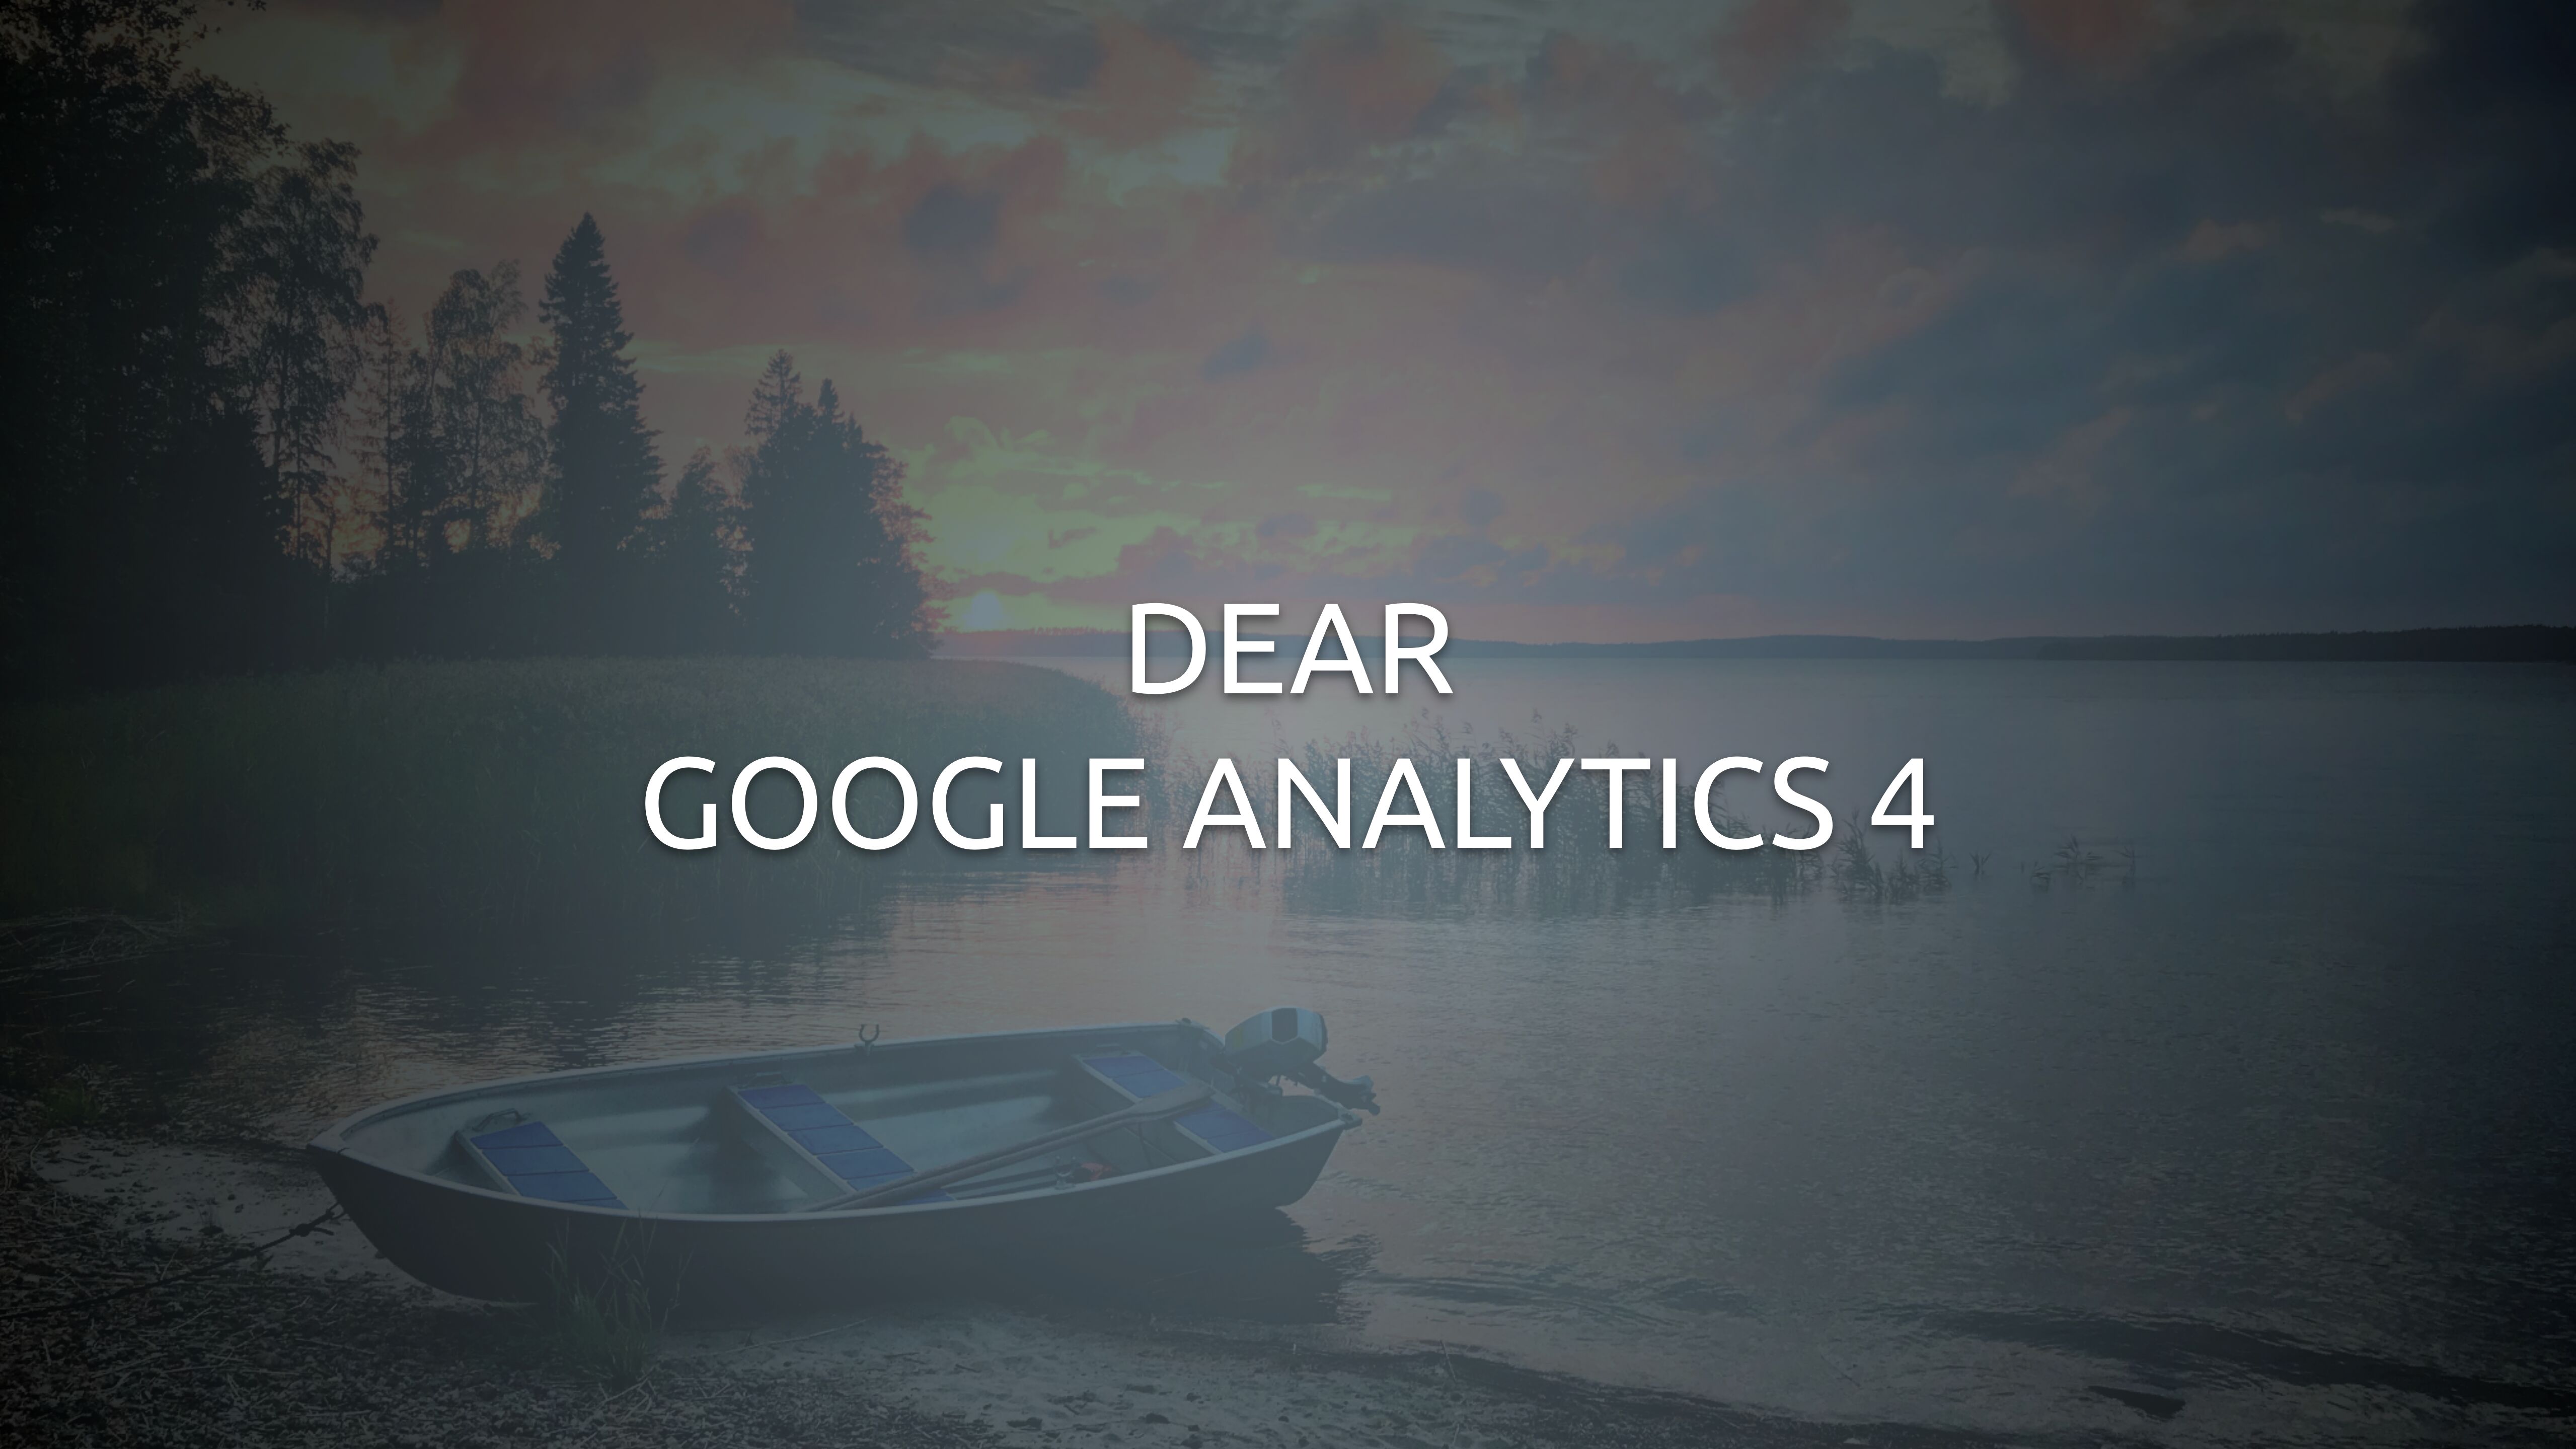 Dear Google Analytics 4